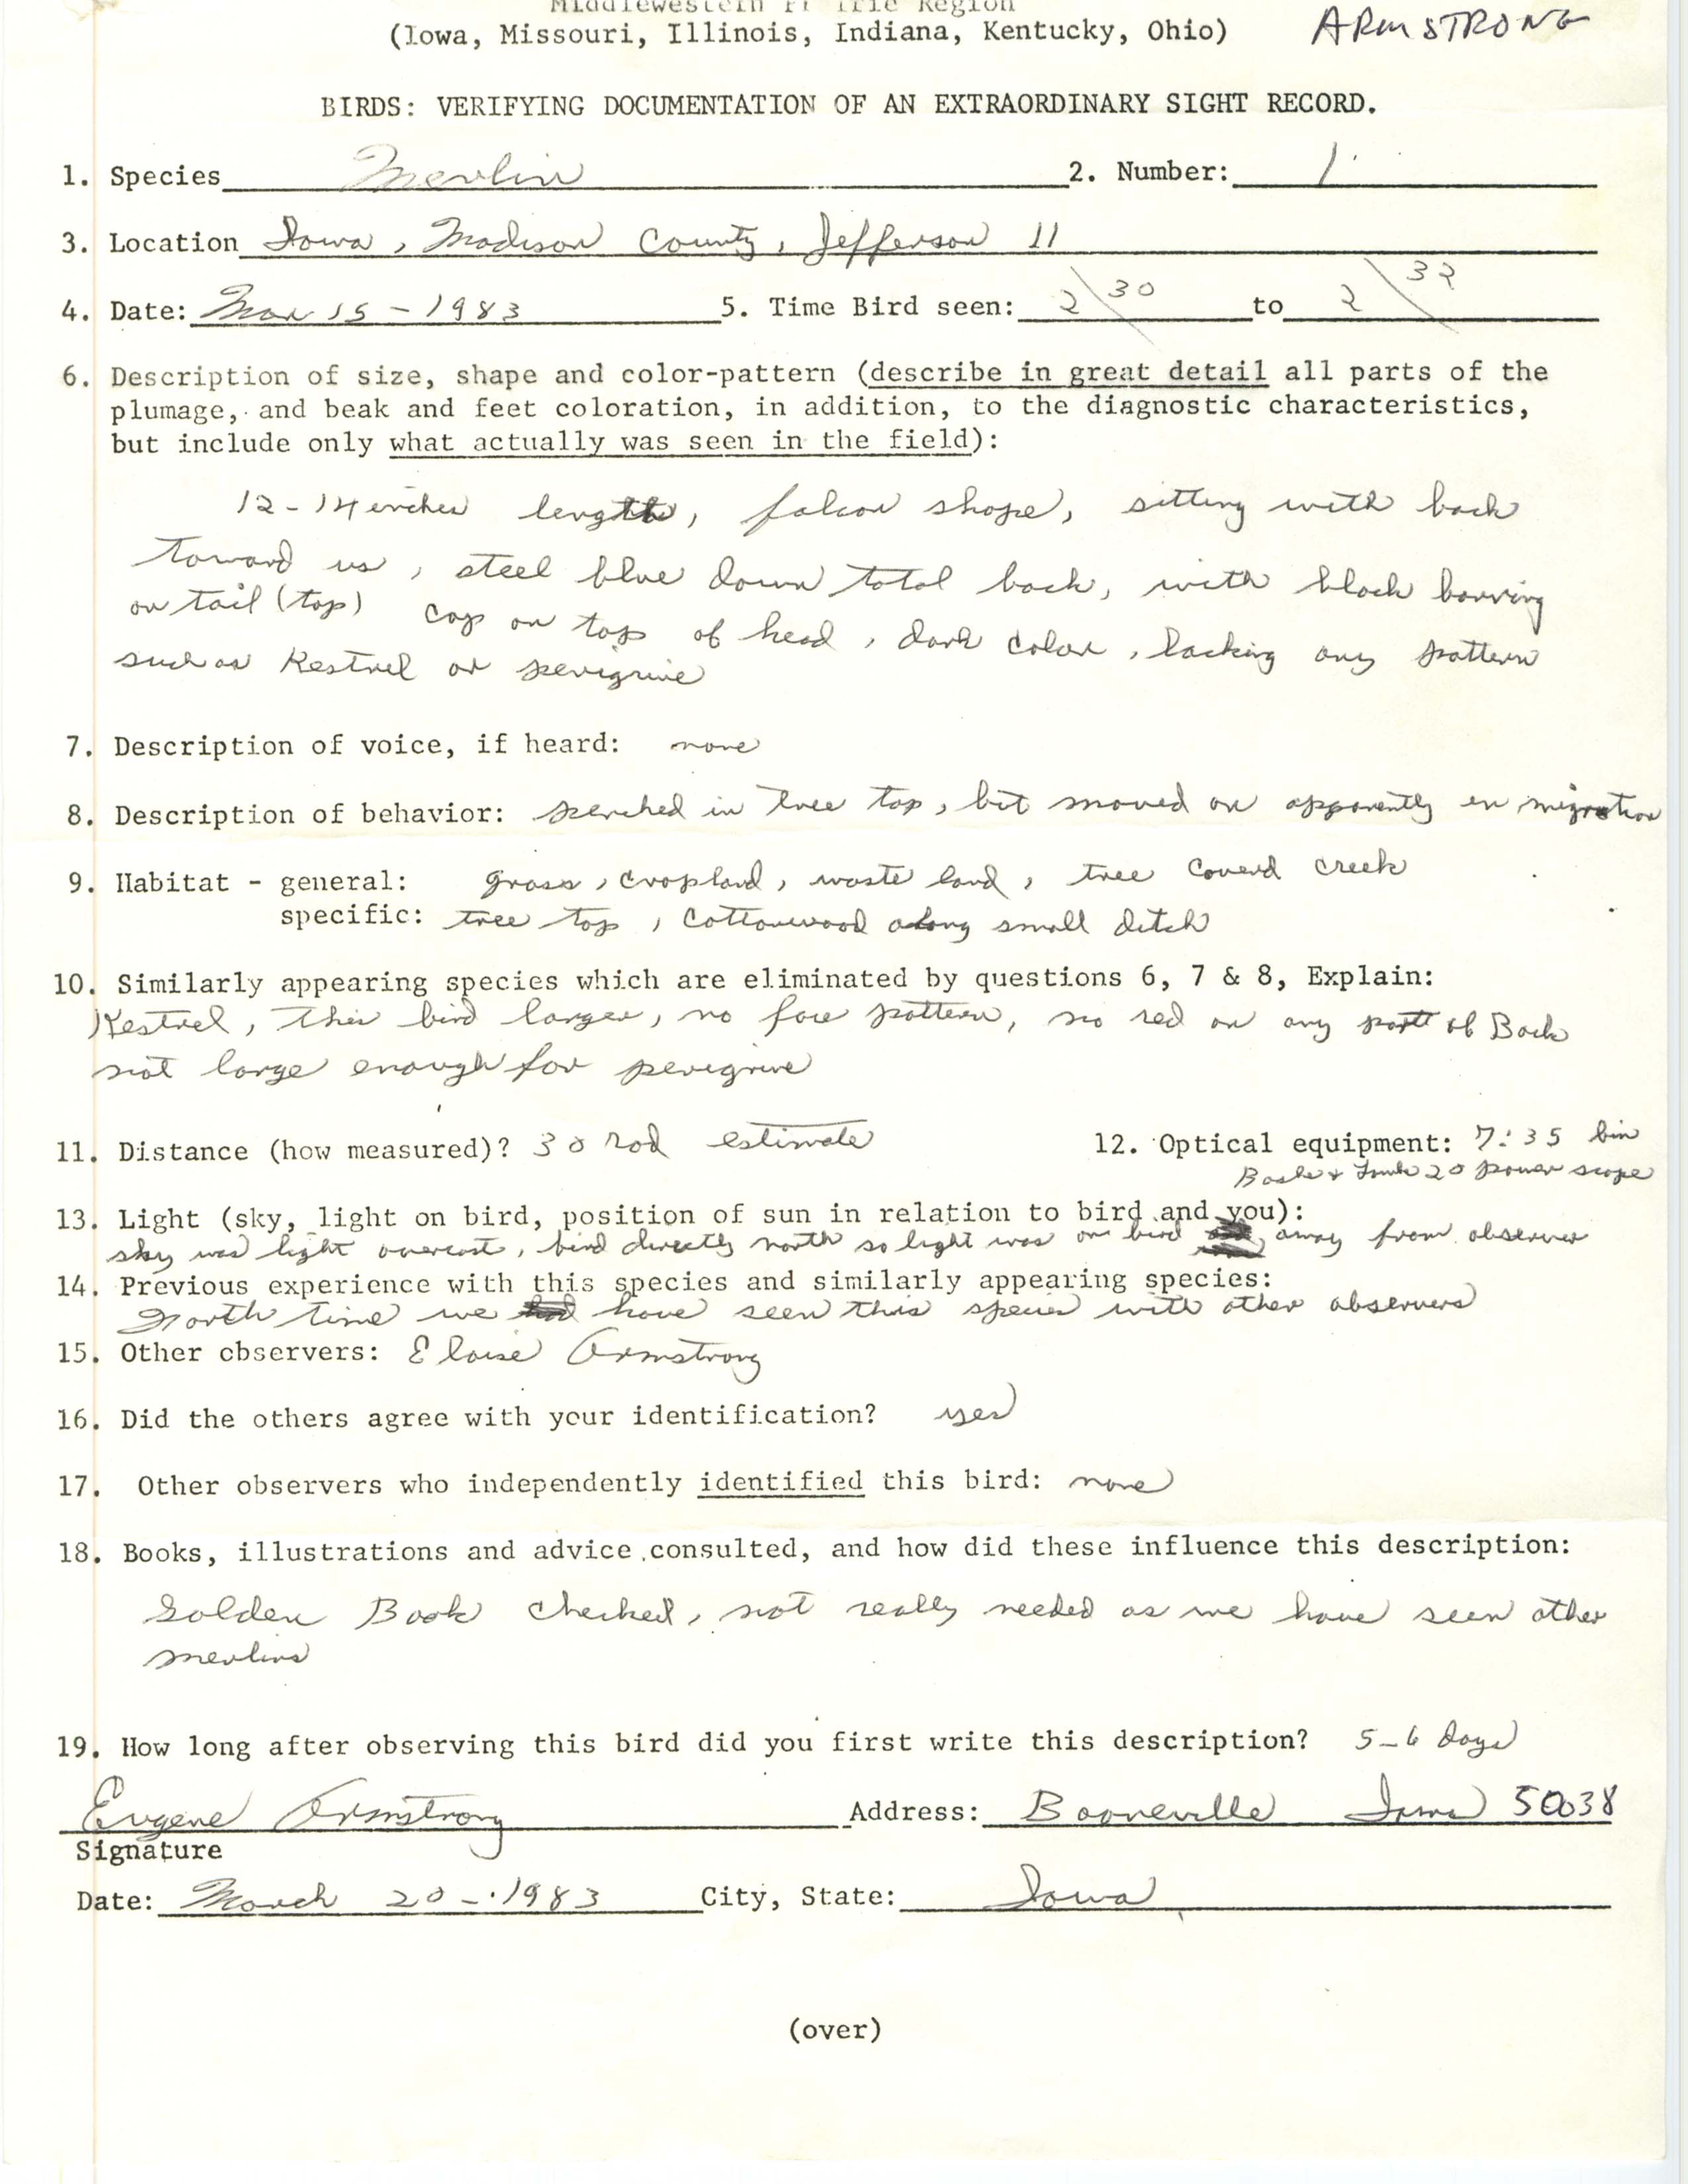 Rare bird documentation form for Merlin at Jefferson Township, 1983